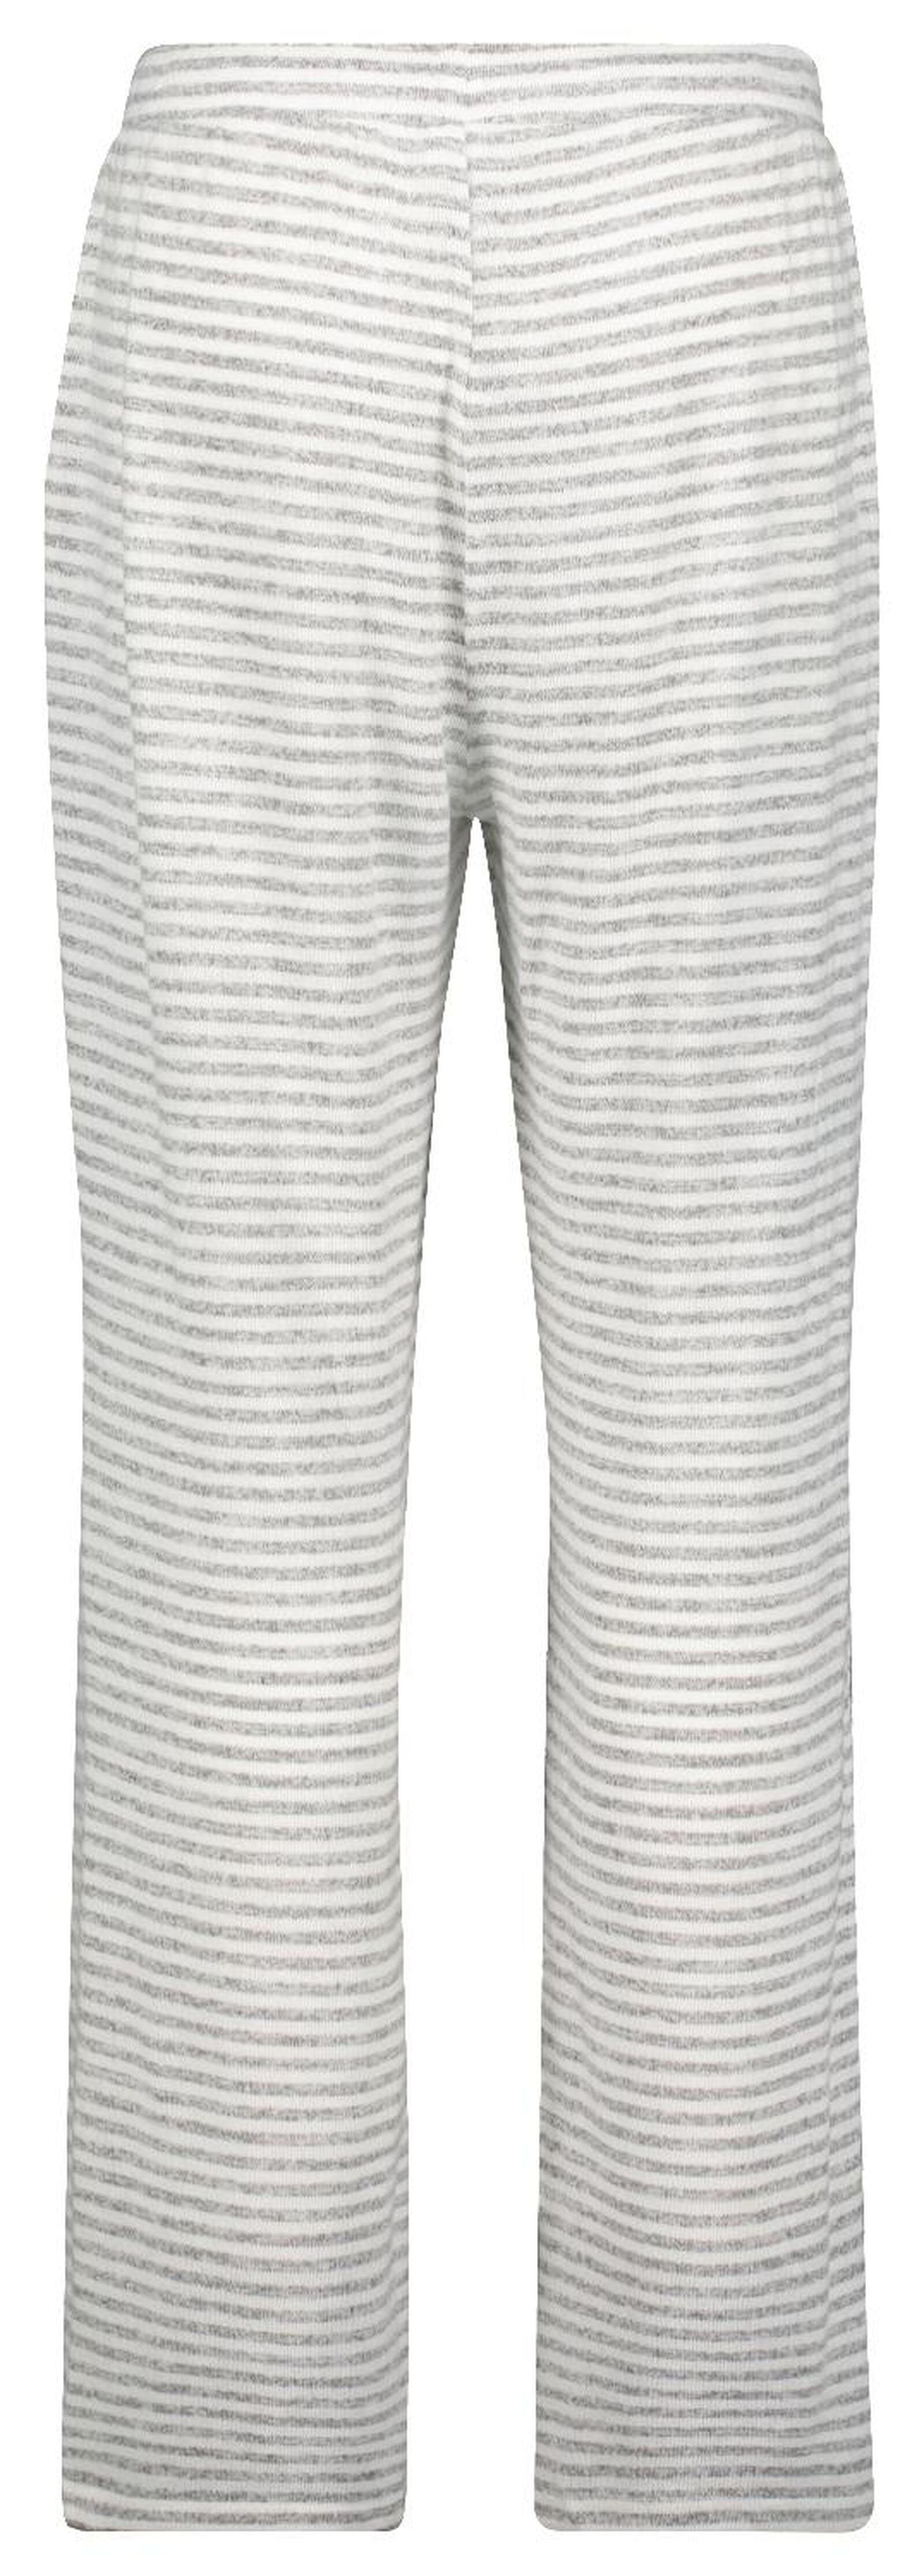 pantalon de pyjama femme viscose rayure gris chiné L - 23421903 - HEMA